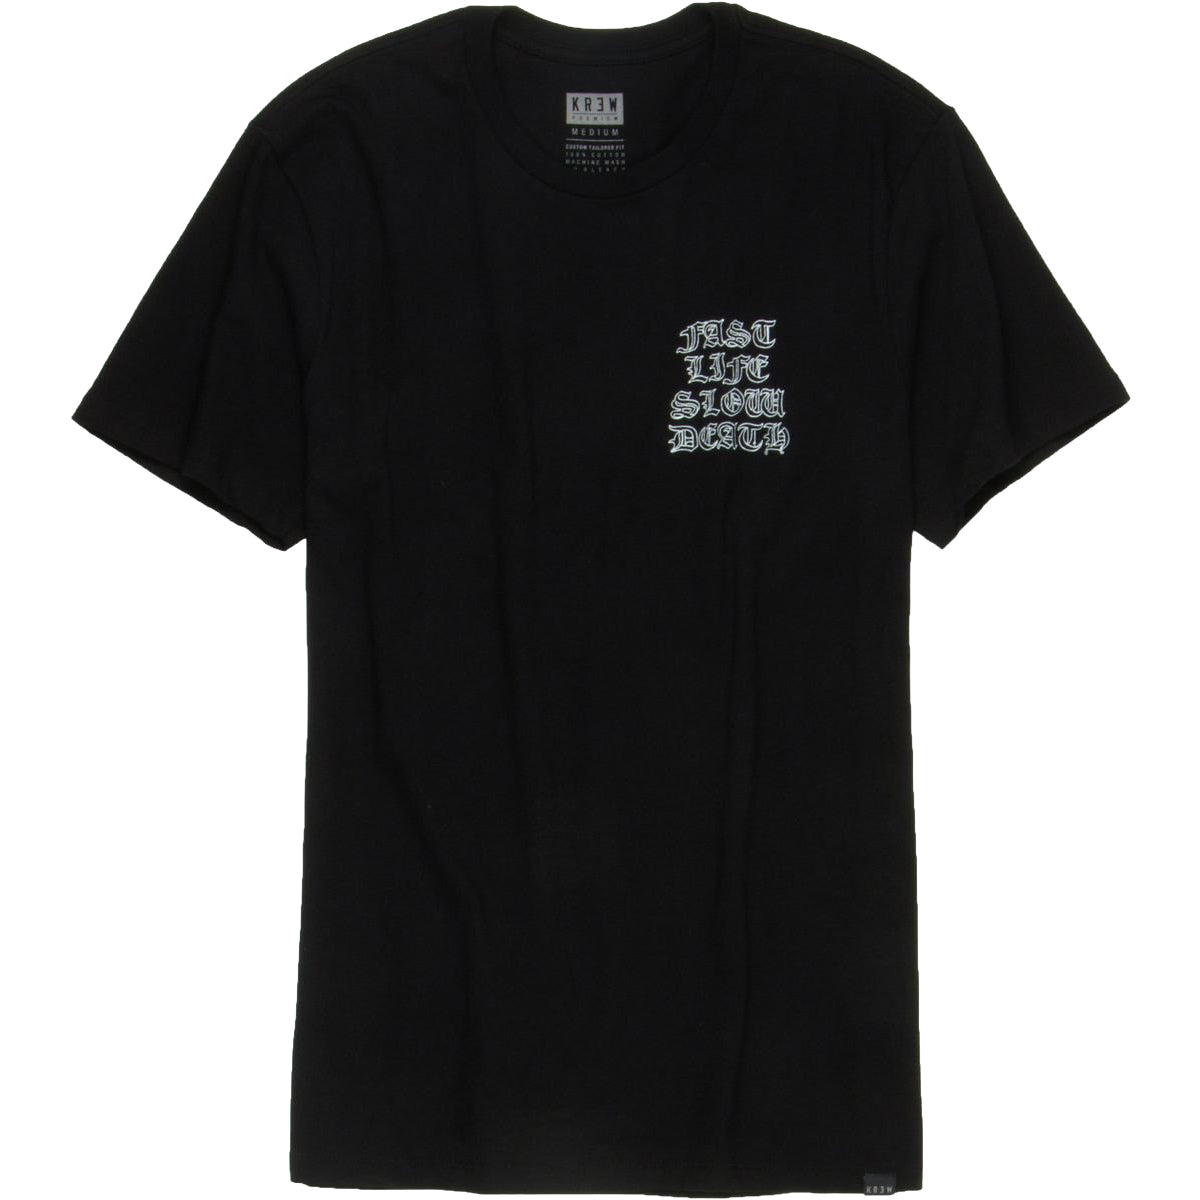 KR3W Slow Death Men's Short-Sleeve Shirts-K5111504